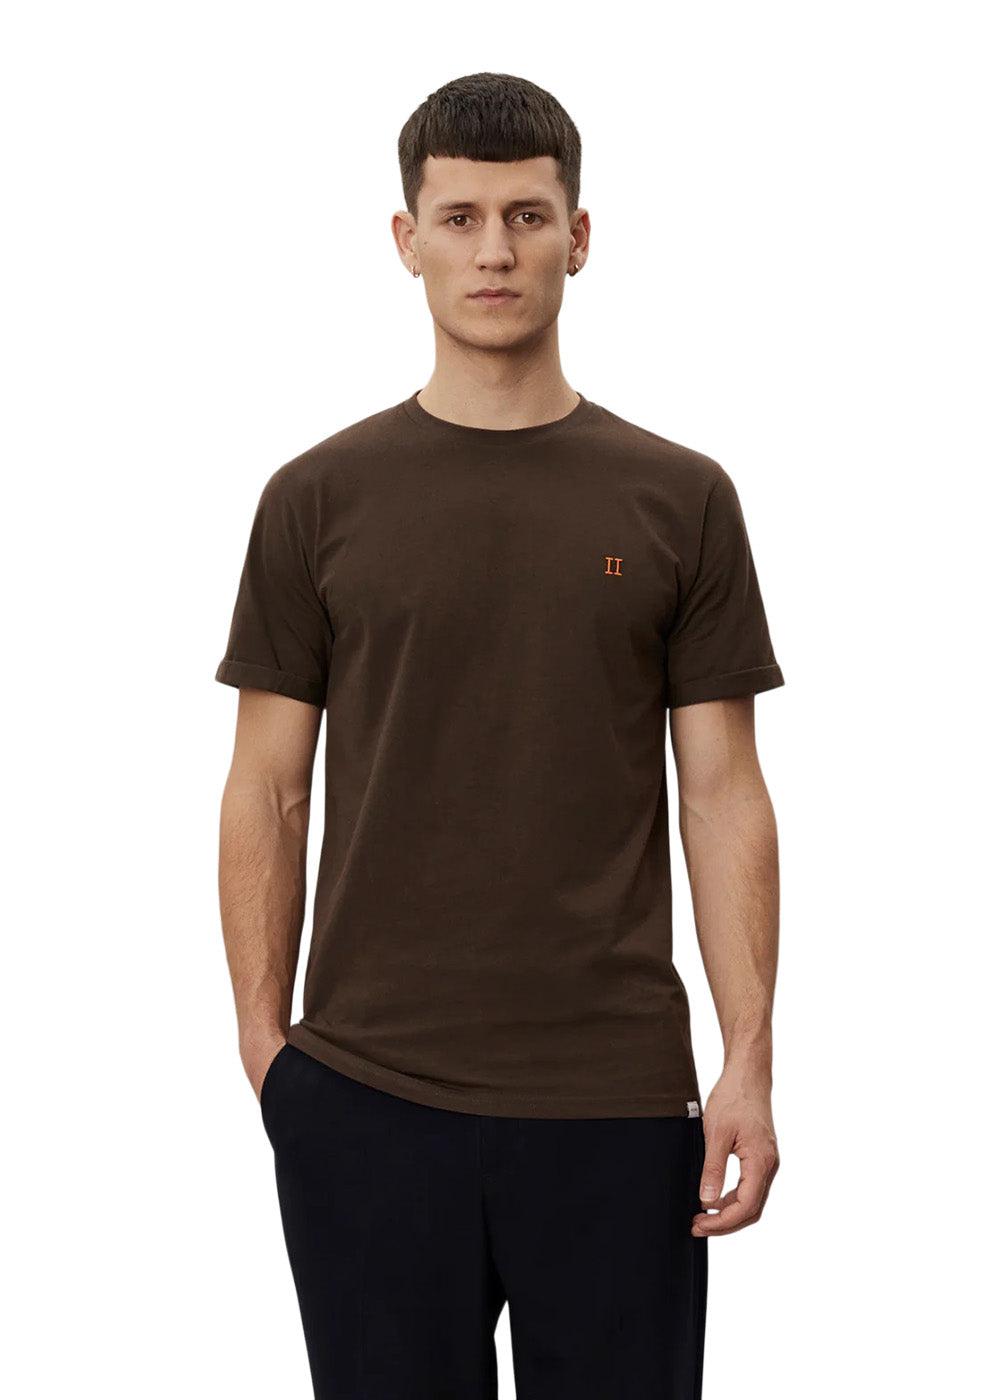 Nørregaard T-Shirt - Coffee Brown/Orange